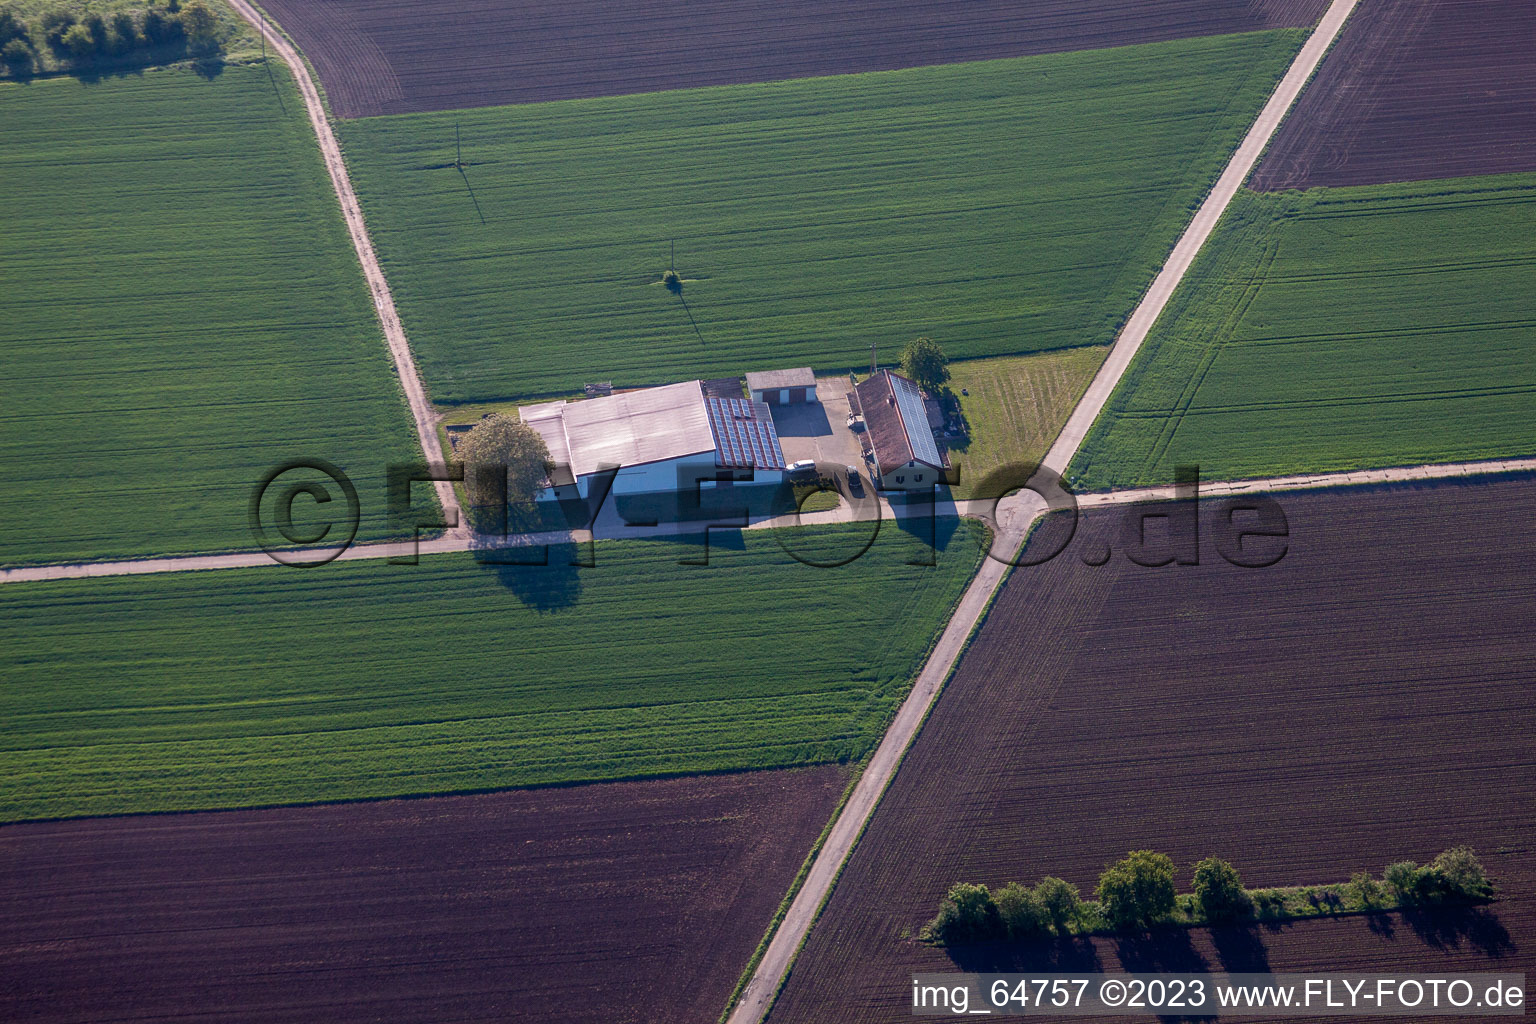 Billigheim-Ingenheim in the state Rhineland-Palatinate, Germany from a drone